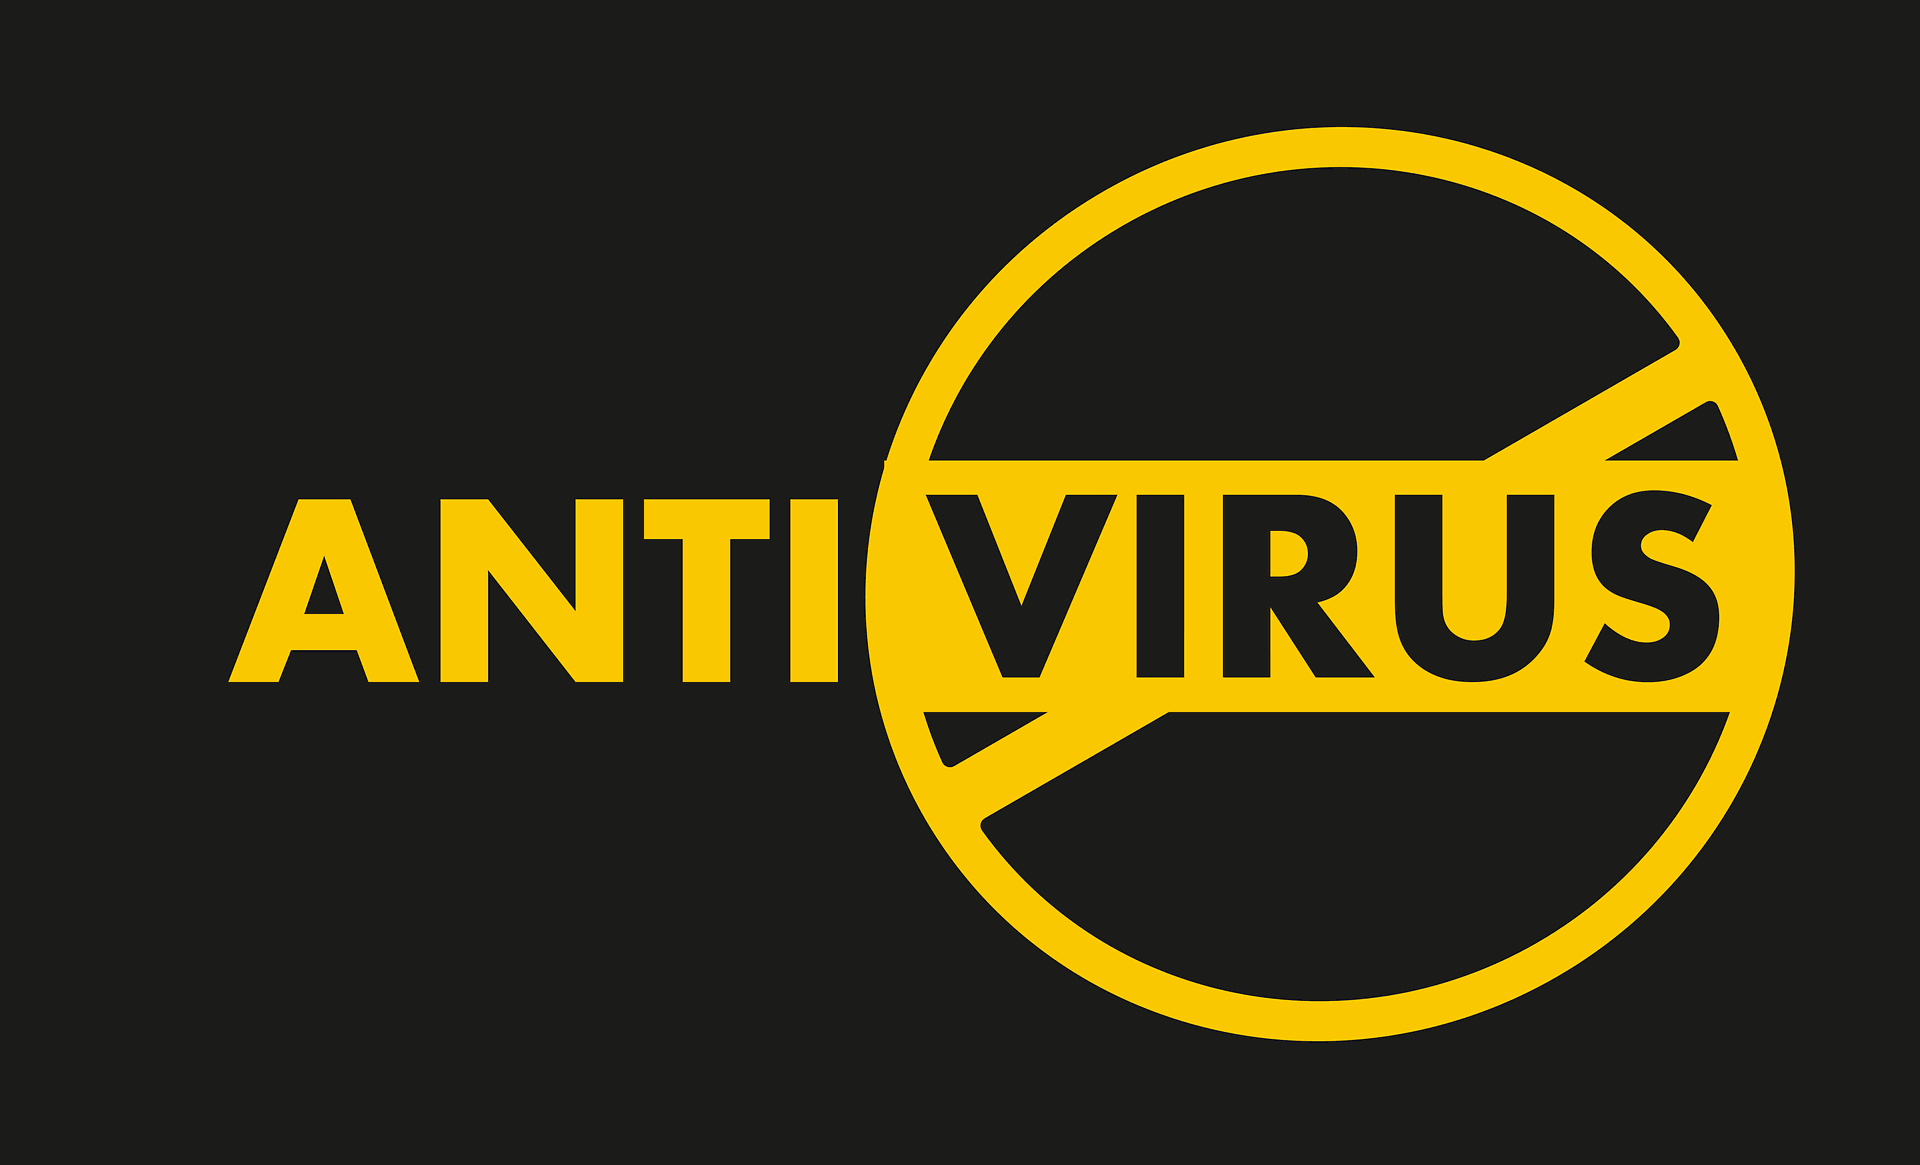 Https антивирус. Антивирус. Антивирус картинки. Логотипы антивирусных программ. Антивирус надпись.